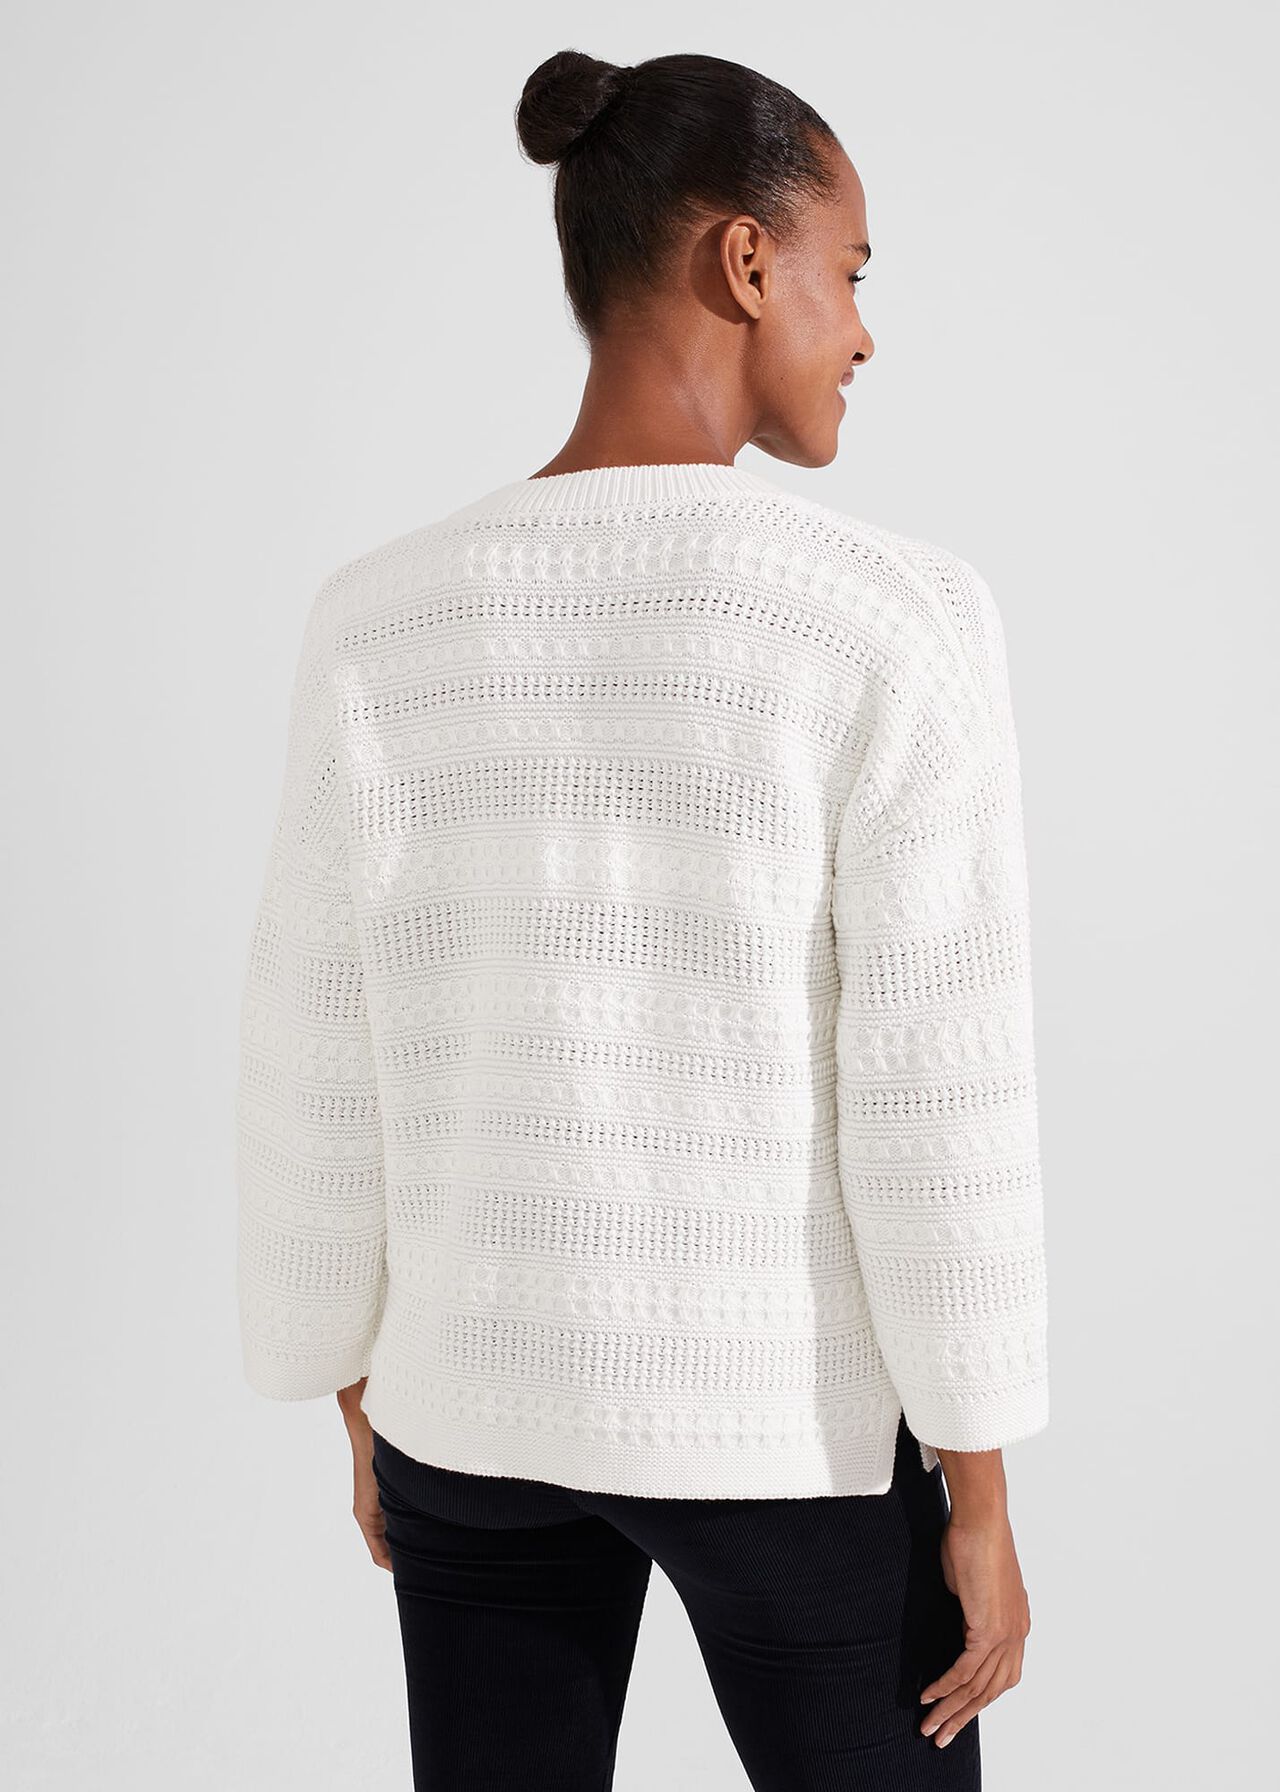 Hadley Cotton Sweater, Ivory, hi-res